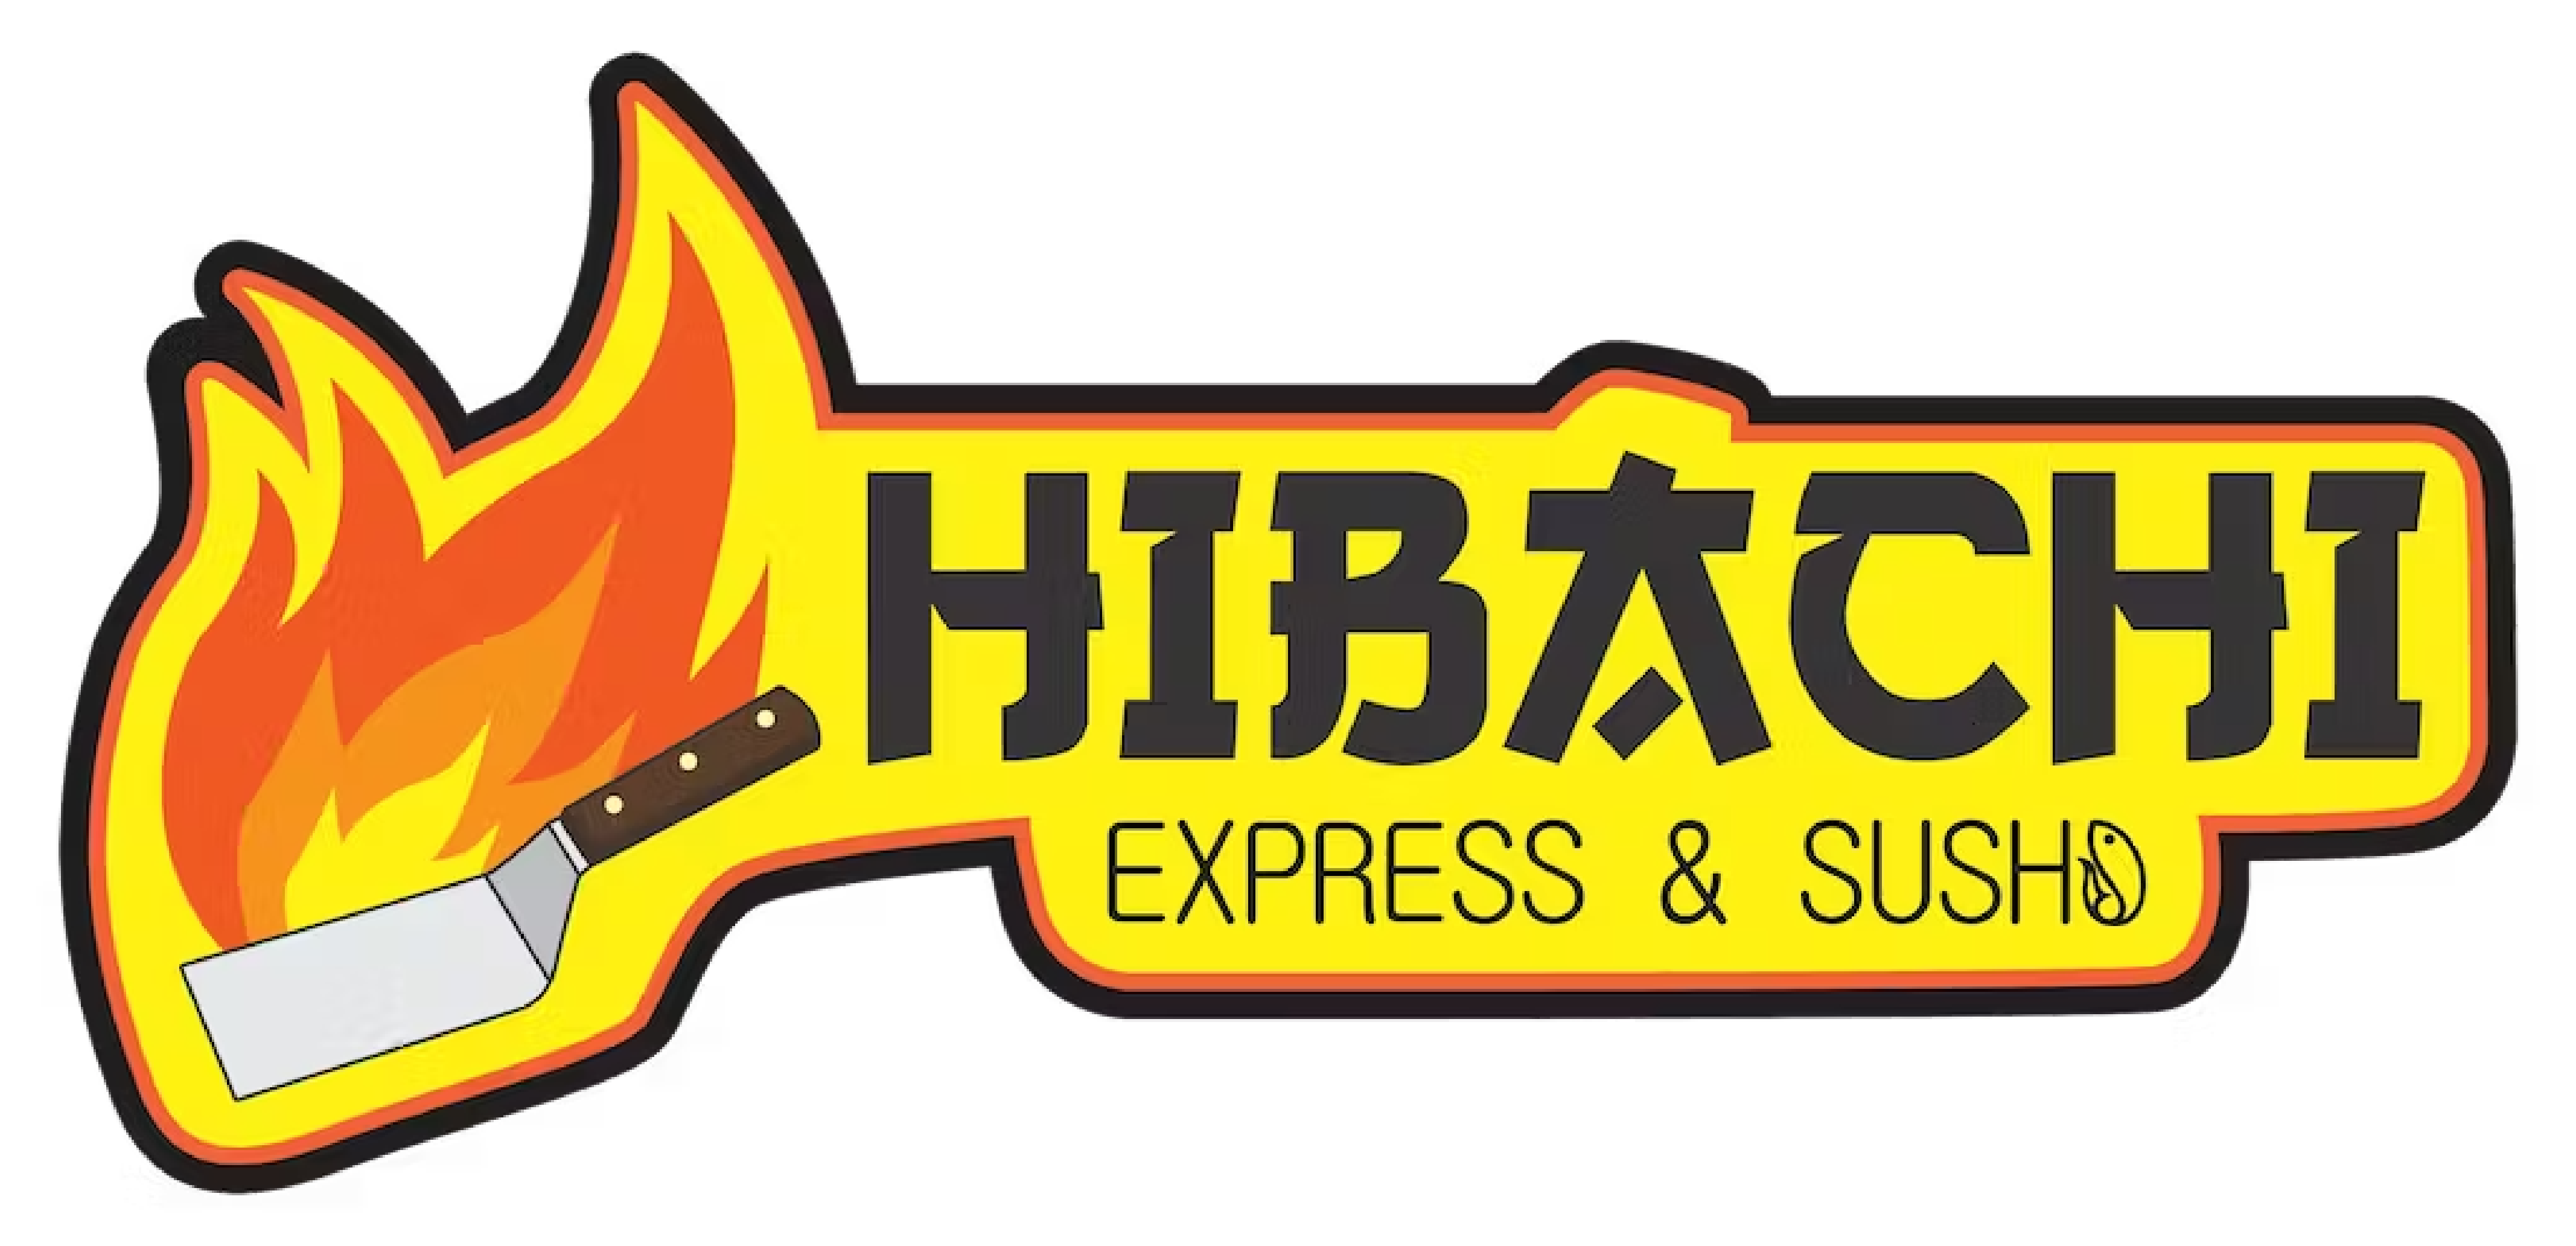 Hibachi Express & Sushi logo